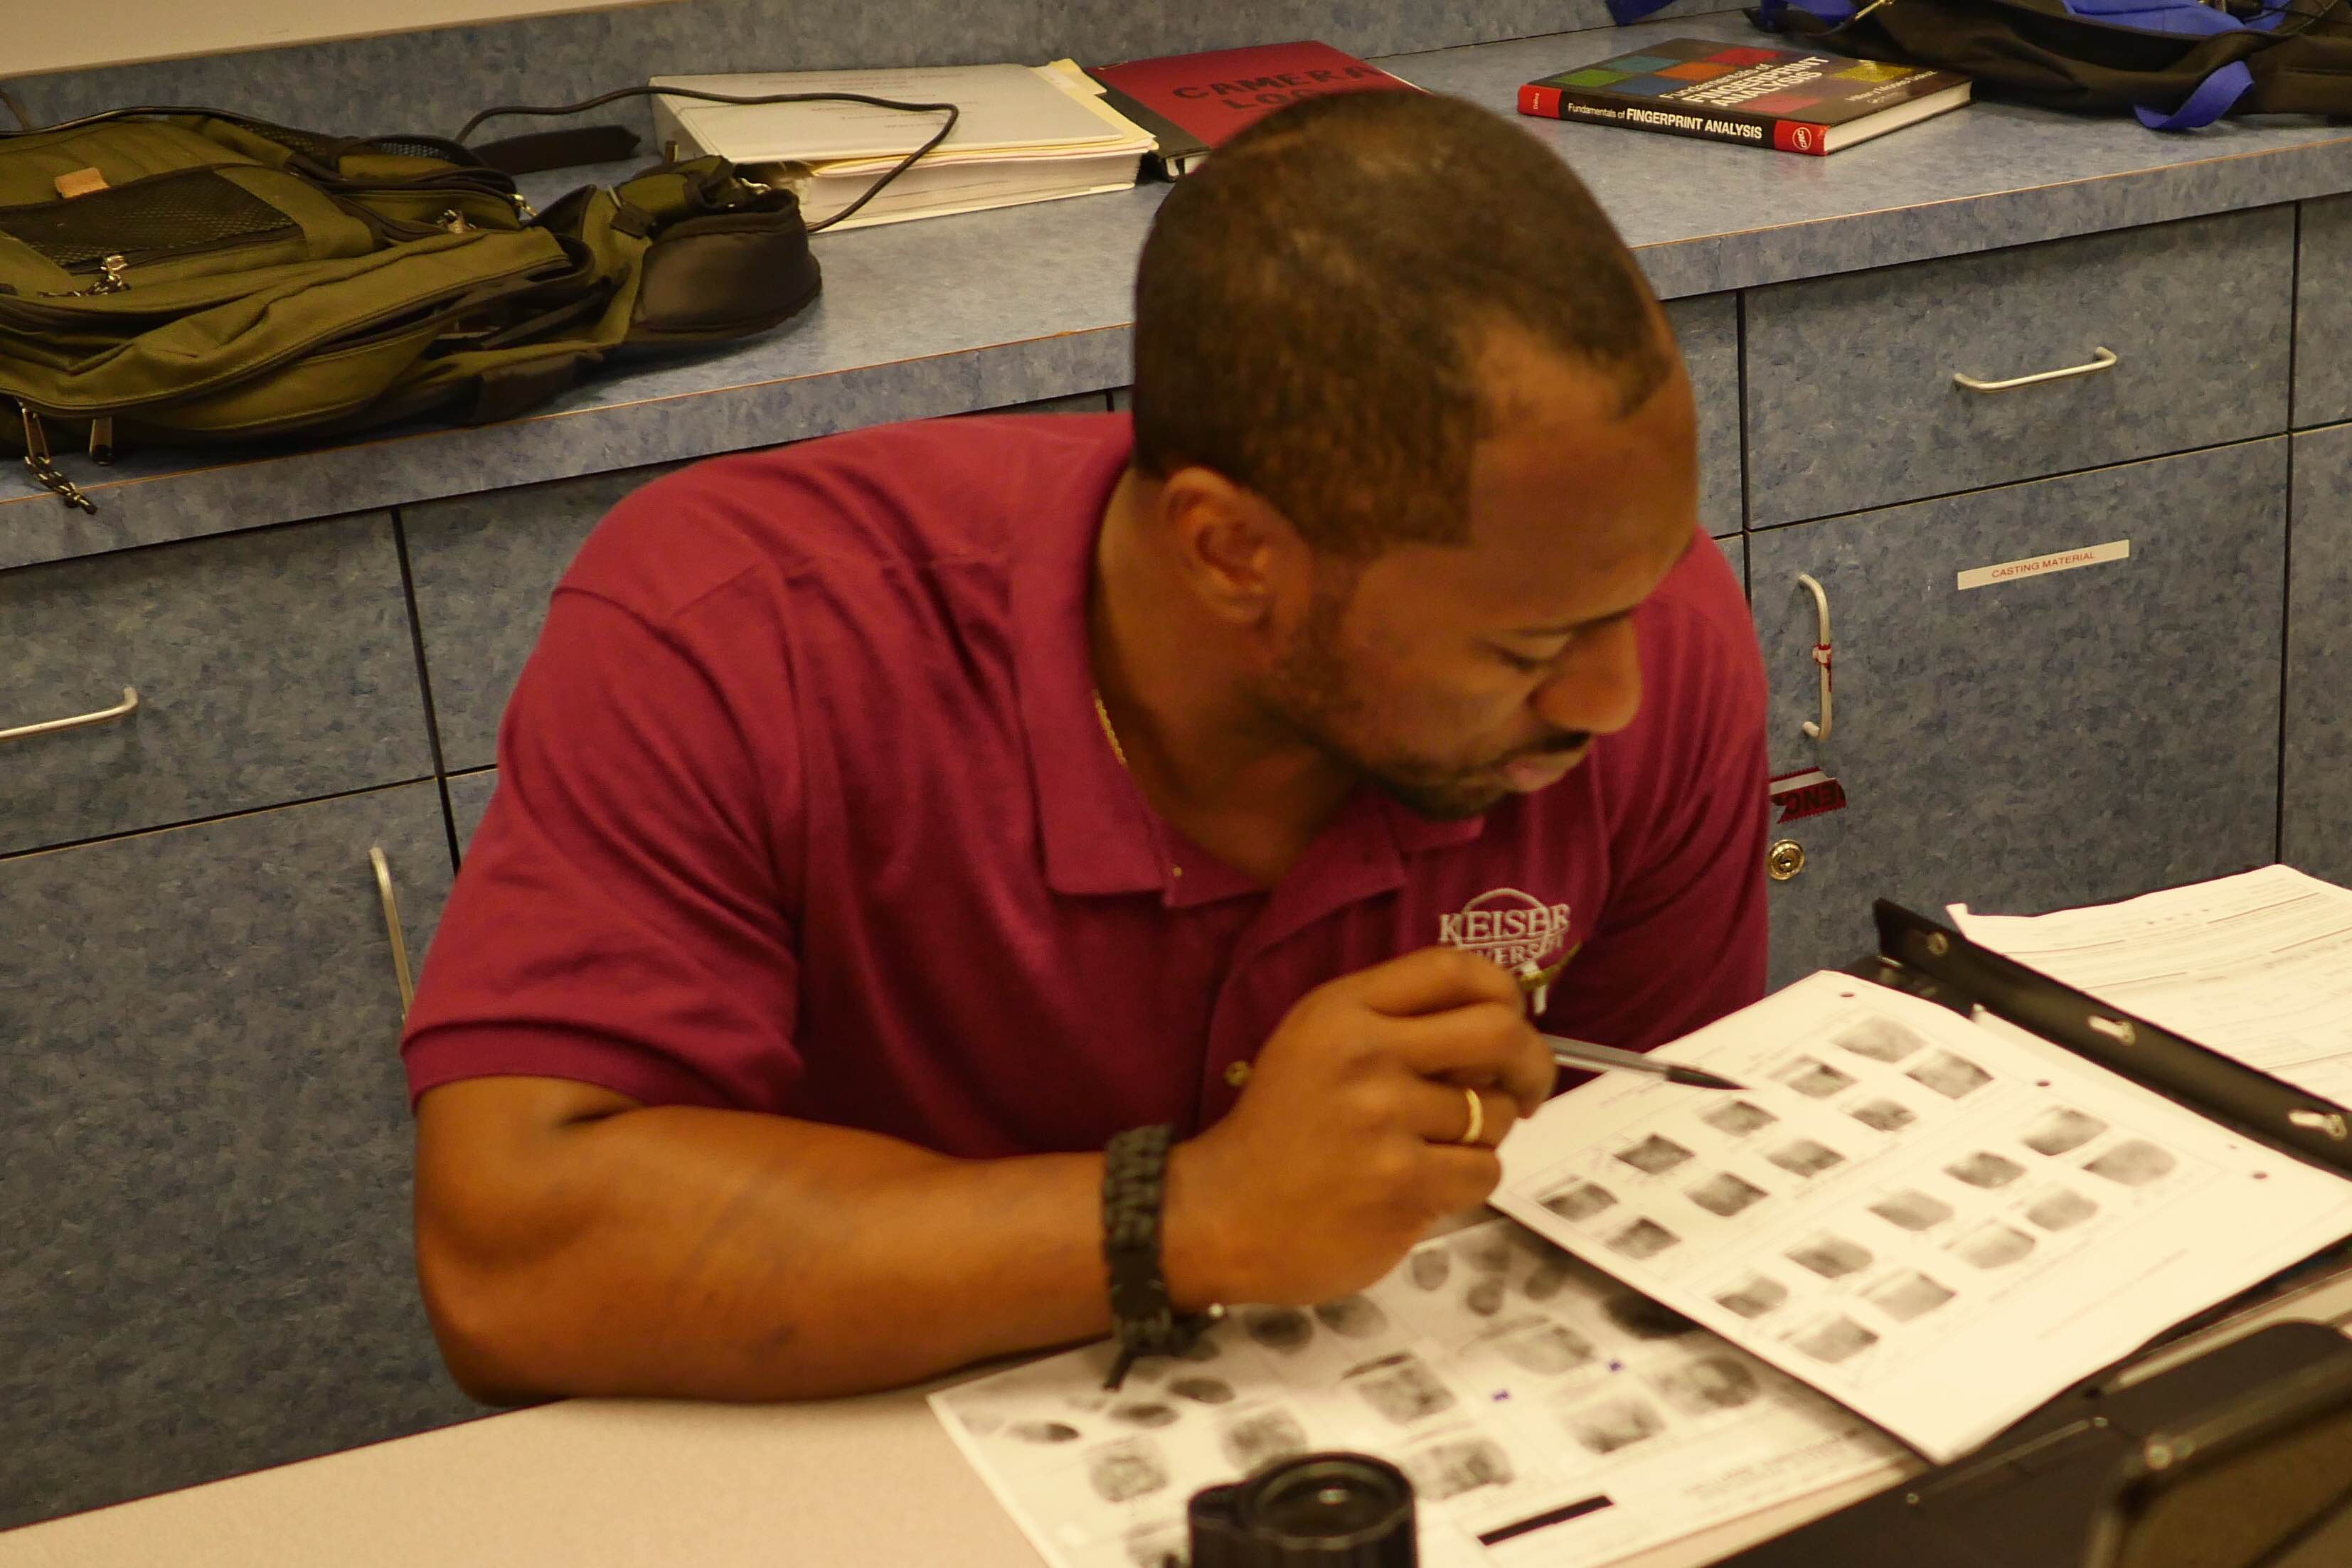 Lakeland Forensic Students Practice Their Fingerprint Classification Skills